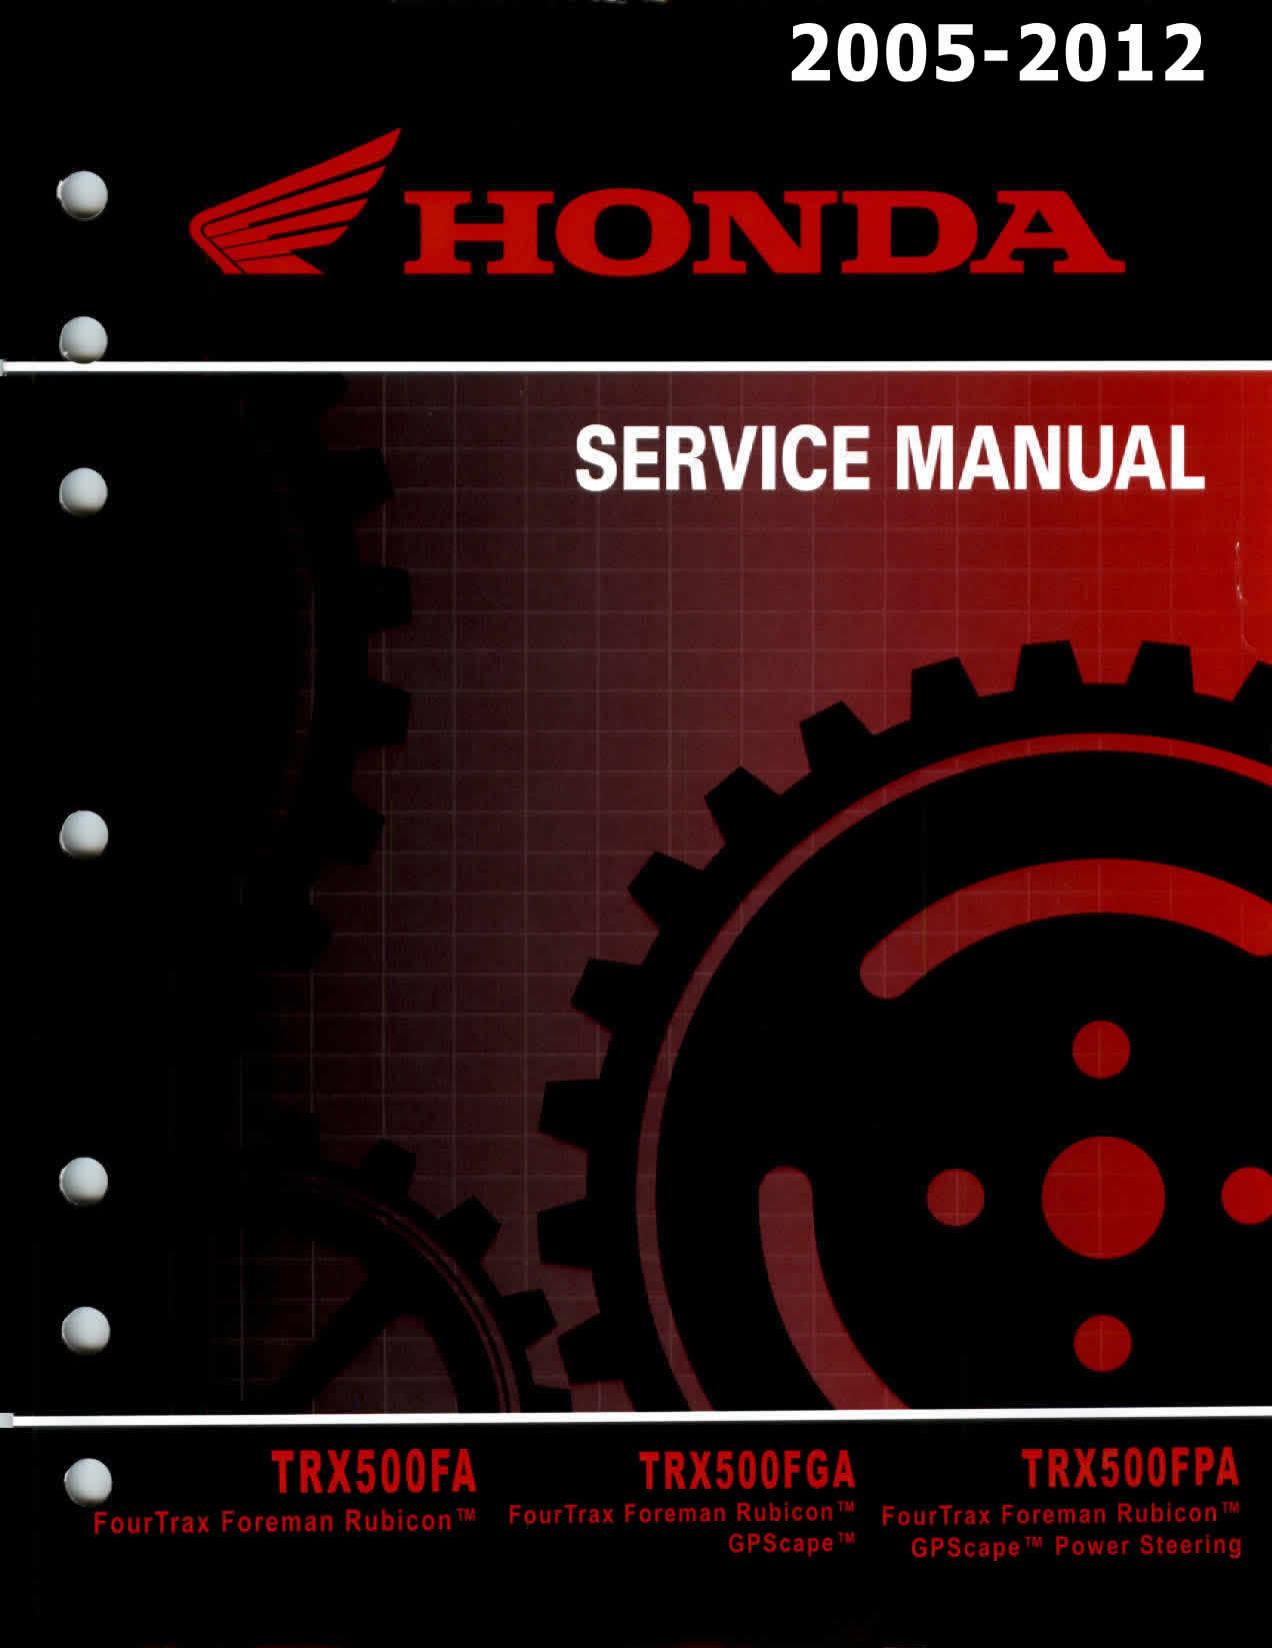 2005-2012 Honda Foreman Rubicon 500 repair and service manual Preview image 6